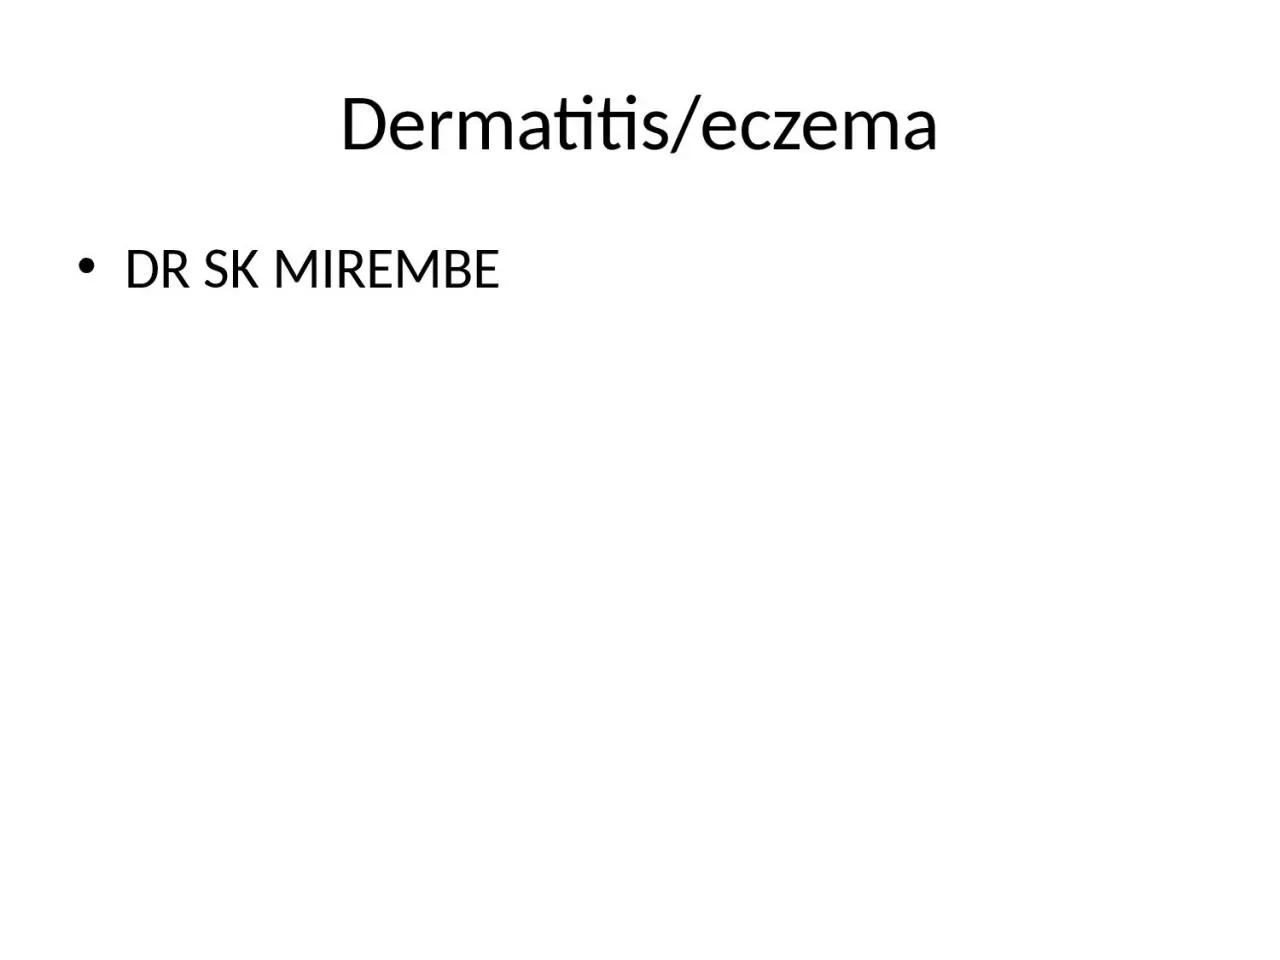 Dermatitis/eczema DR SK MIREMBE